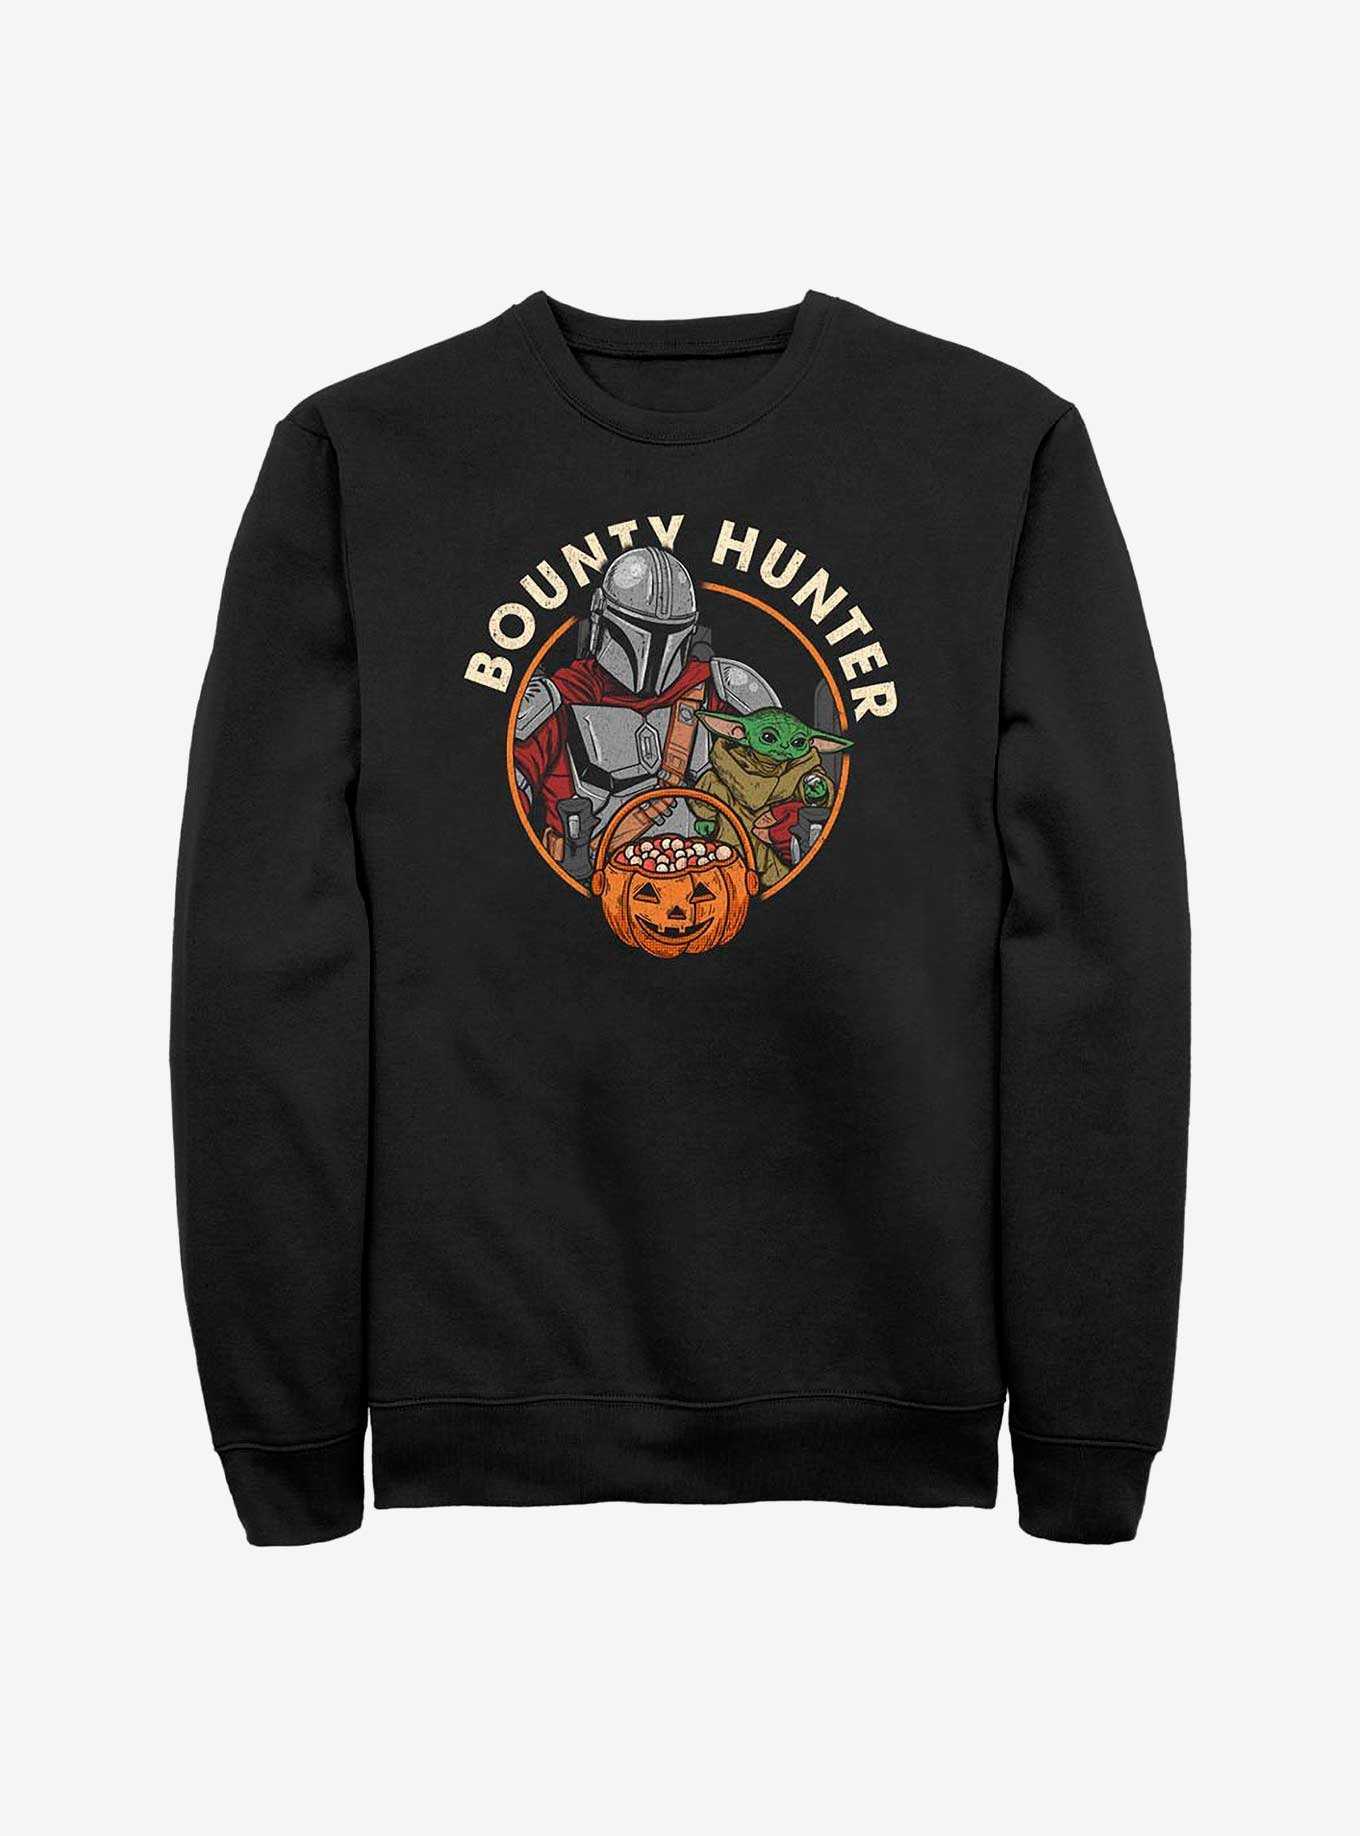 Star Wars The Mandalorian Candy Hunter Sweatshirt, , hi-res